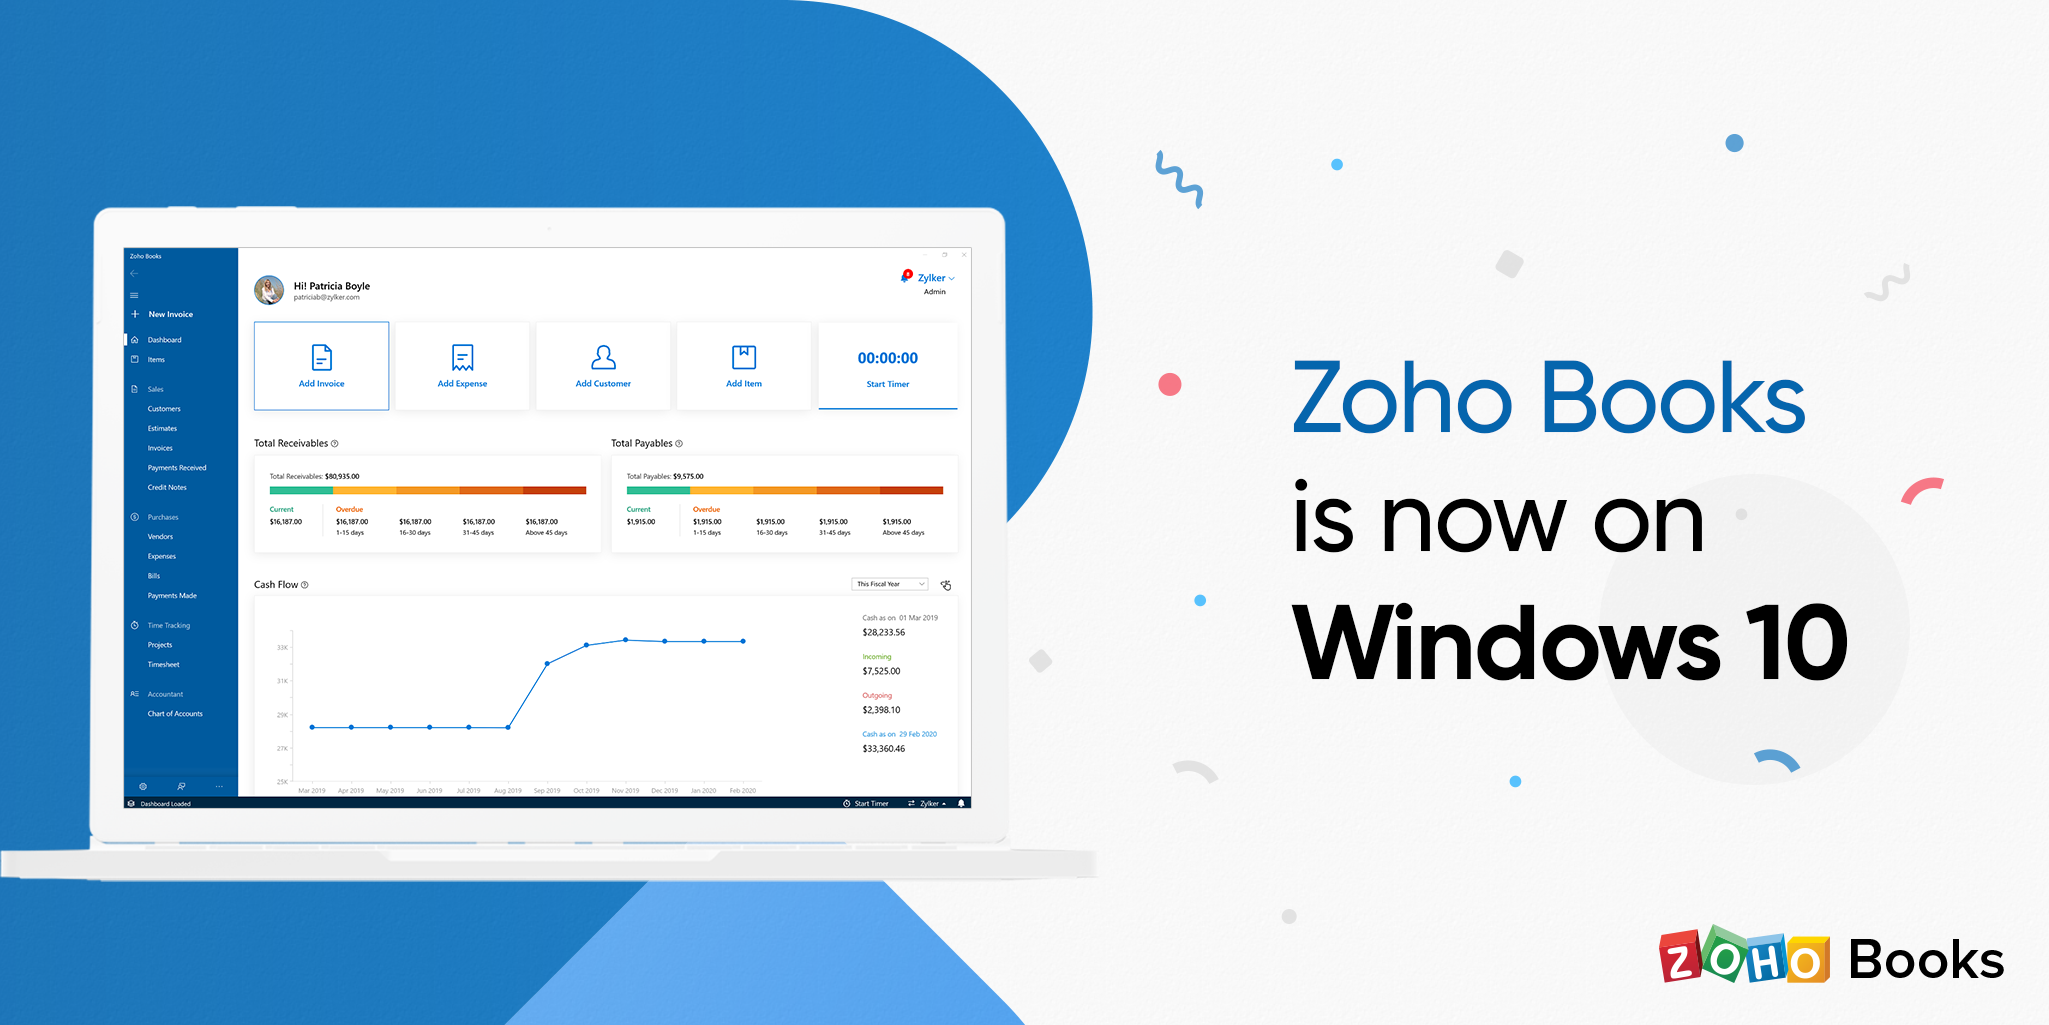 Zoho Books is now on Windows 10